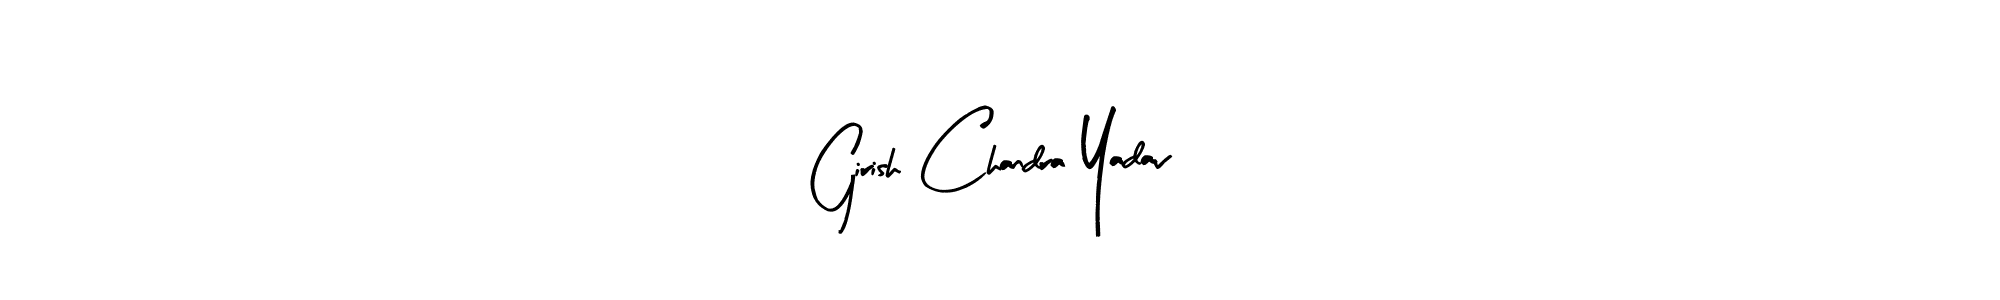 How to Draw Girish Chandra Yadav signature style? Arty Signature is a latest design signature styles for name Girish Chandra Yadav. Girish Chandra Yadav signature style 8 images and pictures png